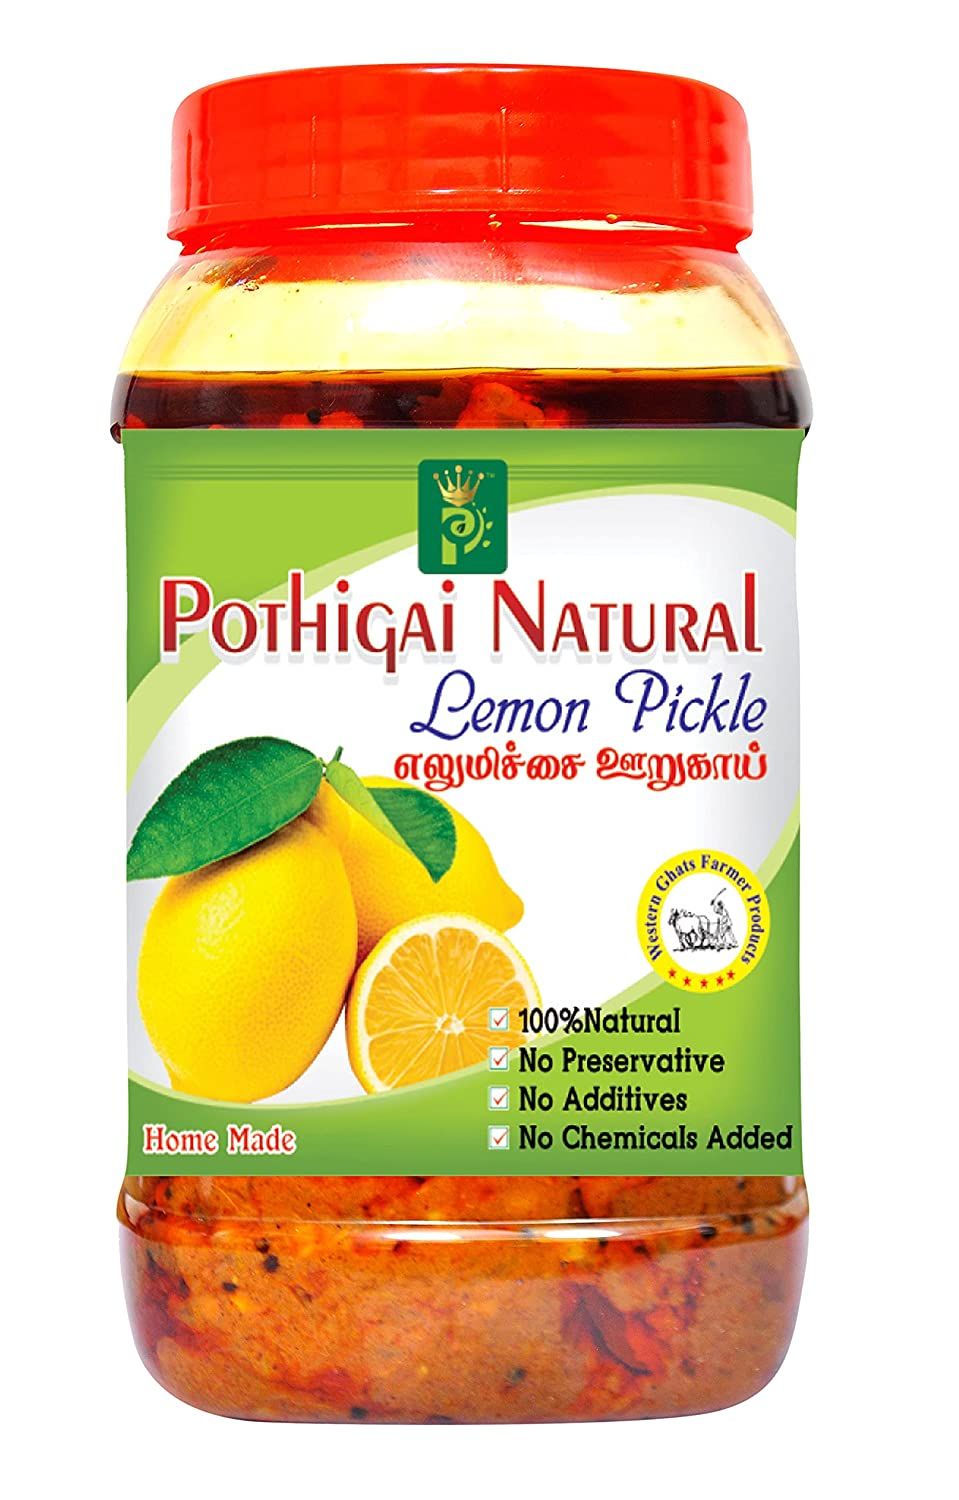 Pothigai Natural Lemon Pickle Image